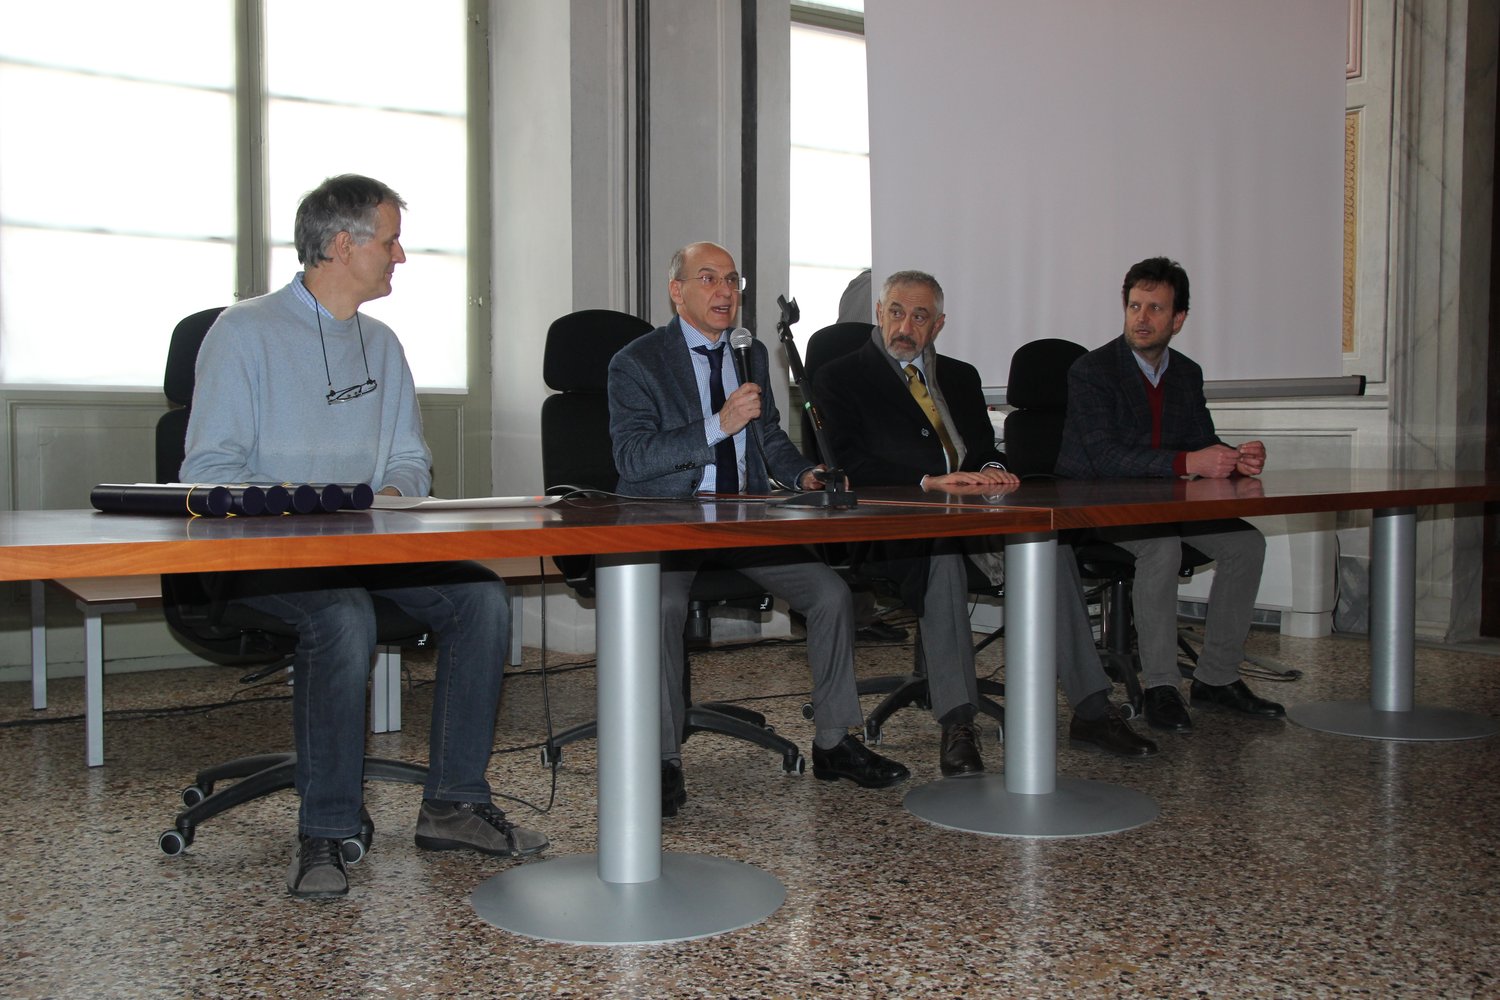 Premi di laurea “Danieli” a 6 laureati in ingegneria dell'Università di  Udine - Qui UNIUD